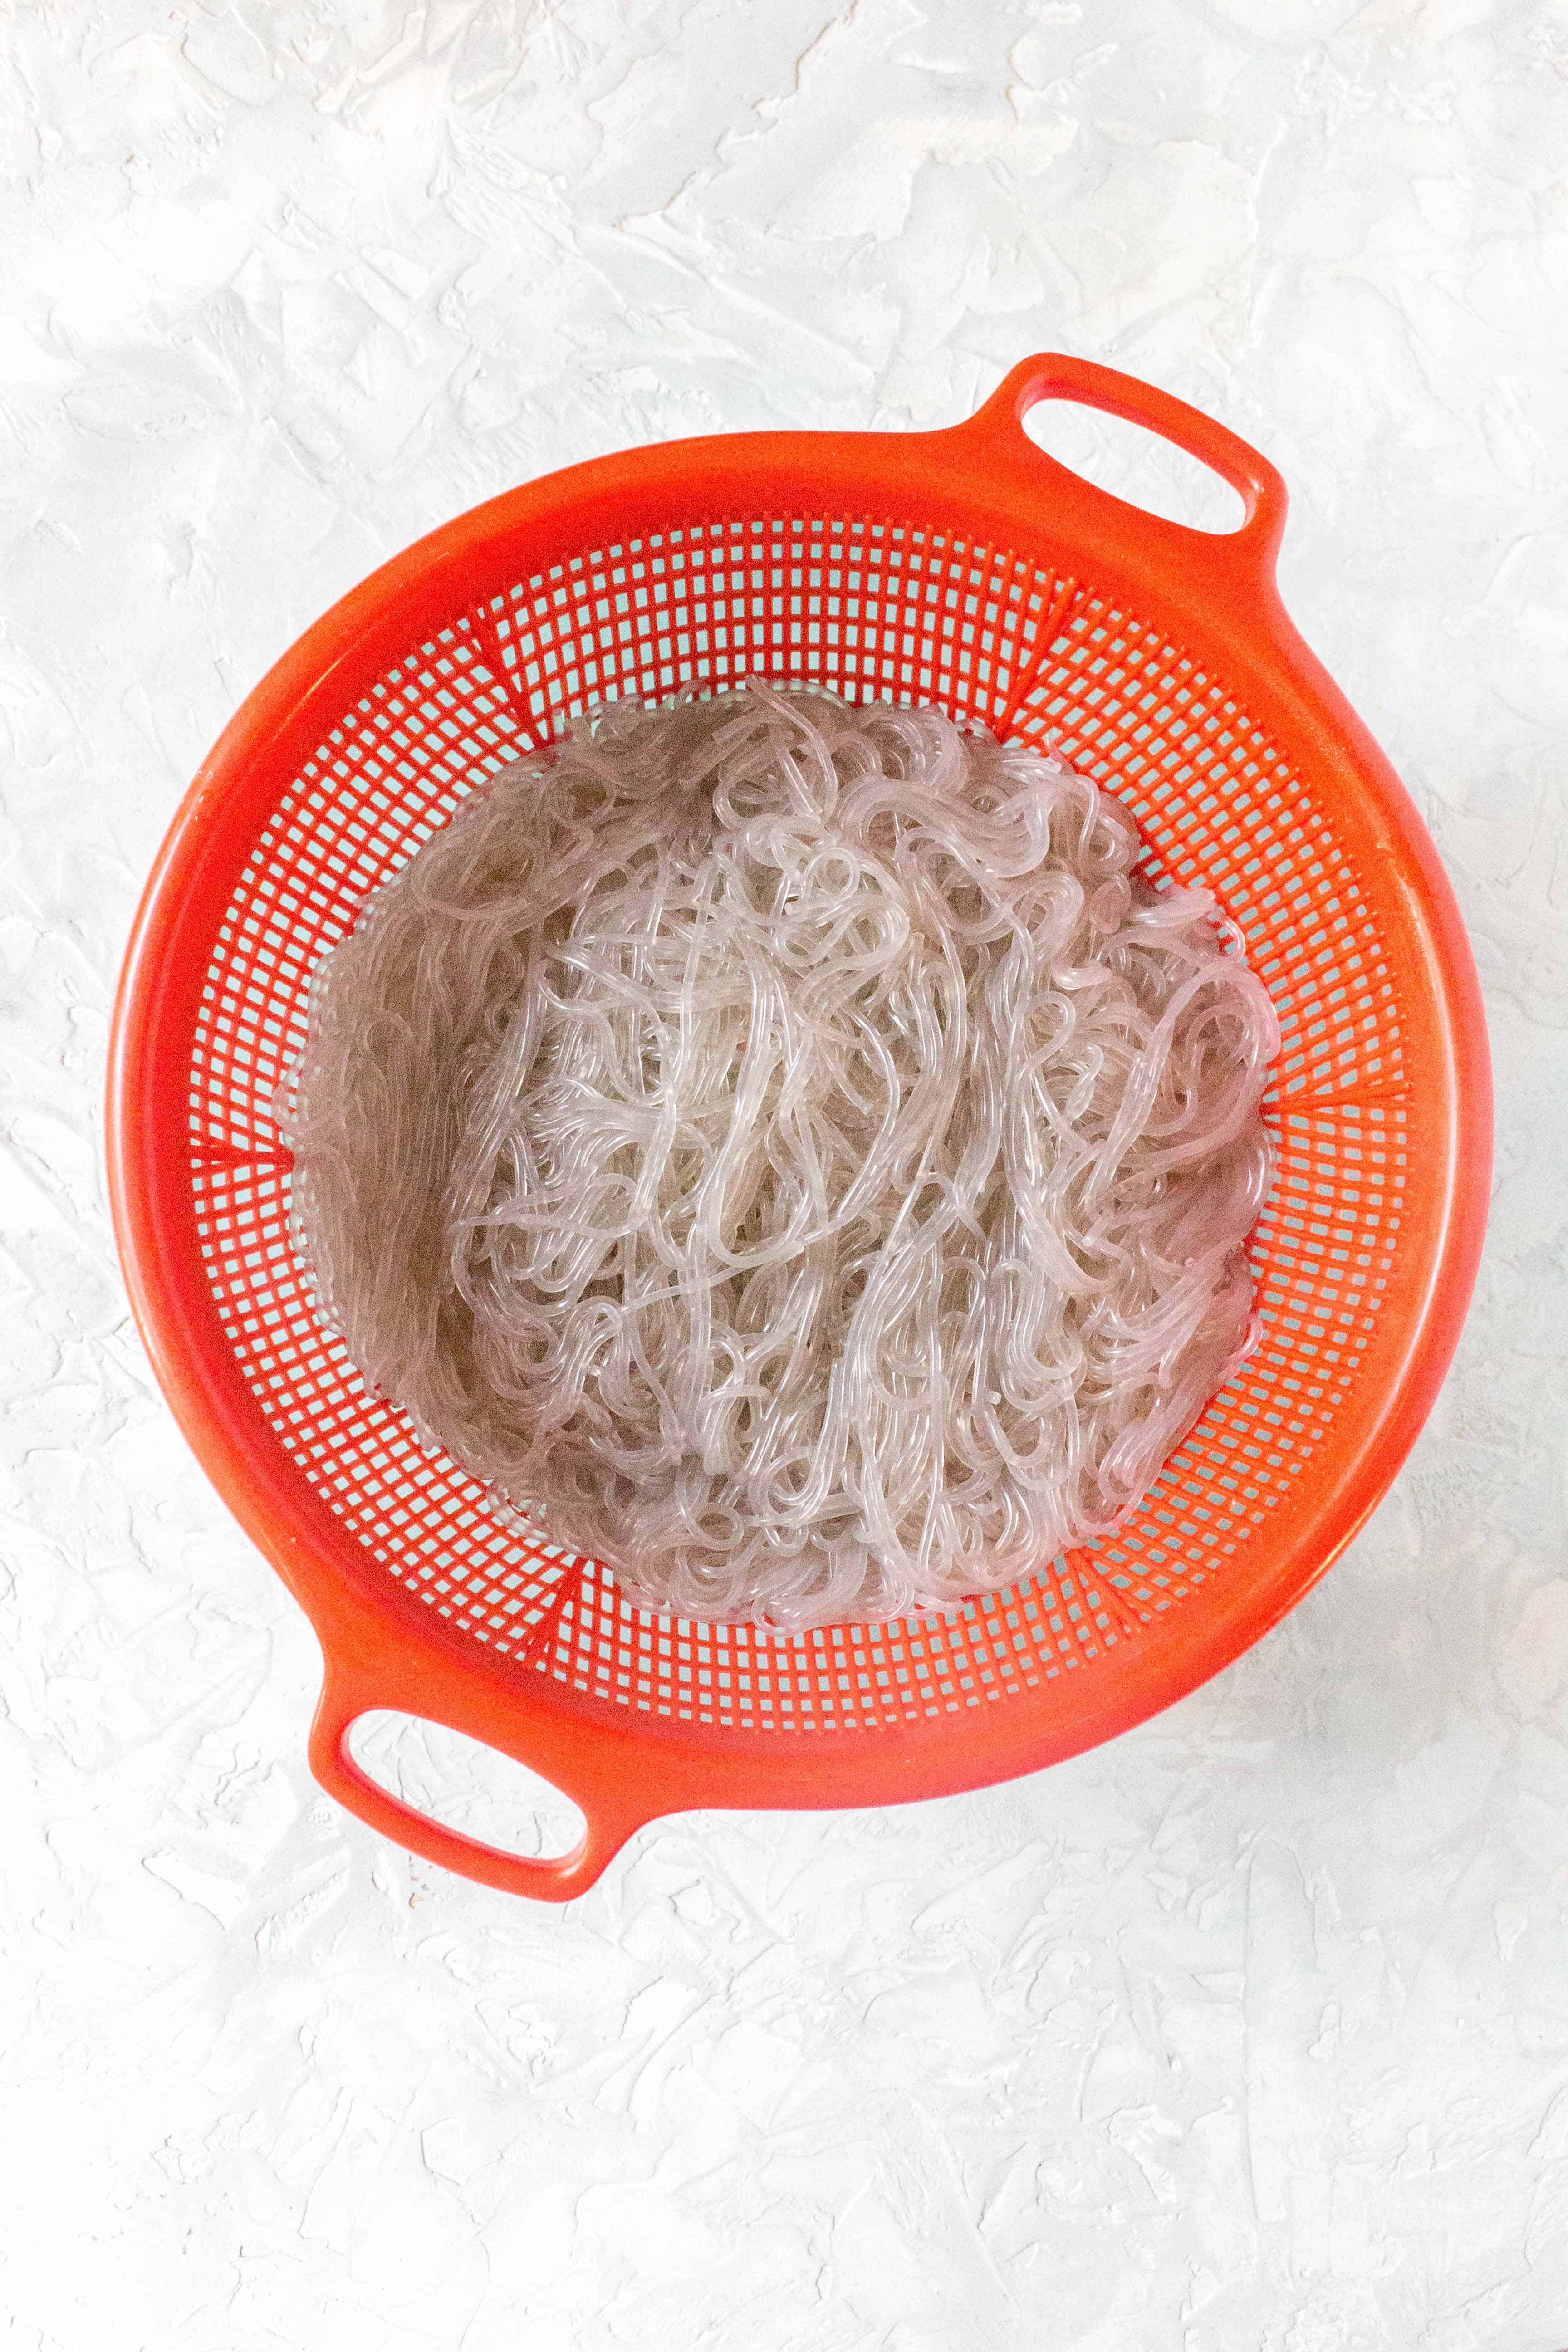 how to make japchae / korean glass noodles at home